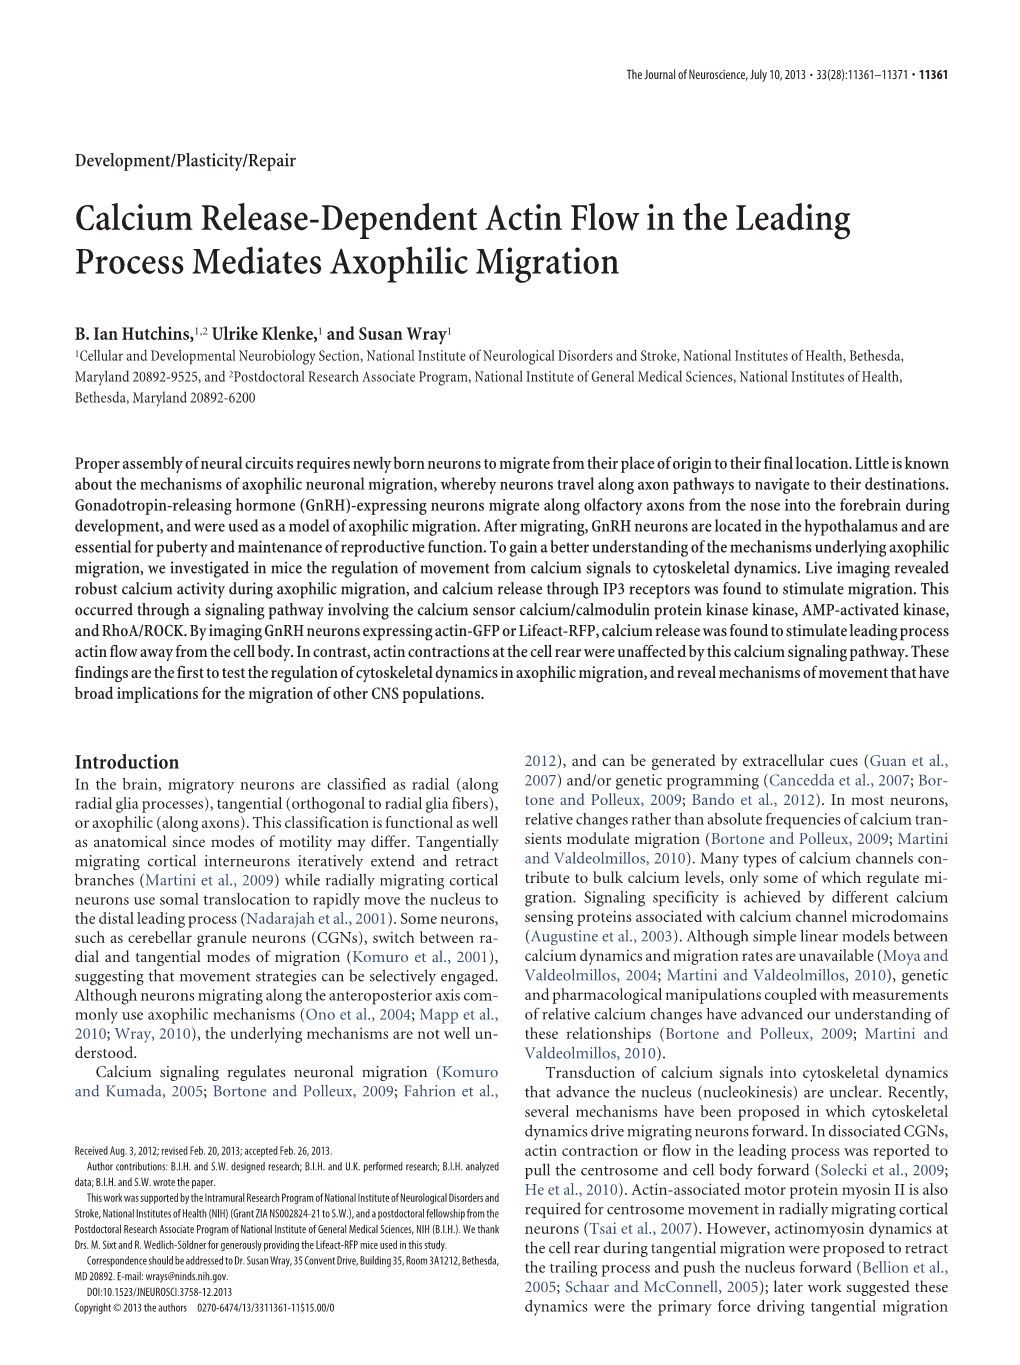 Calcium Release-Dependent Actin Flow in the Leading Process Mediates Axophilic Migration